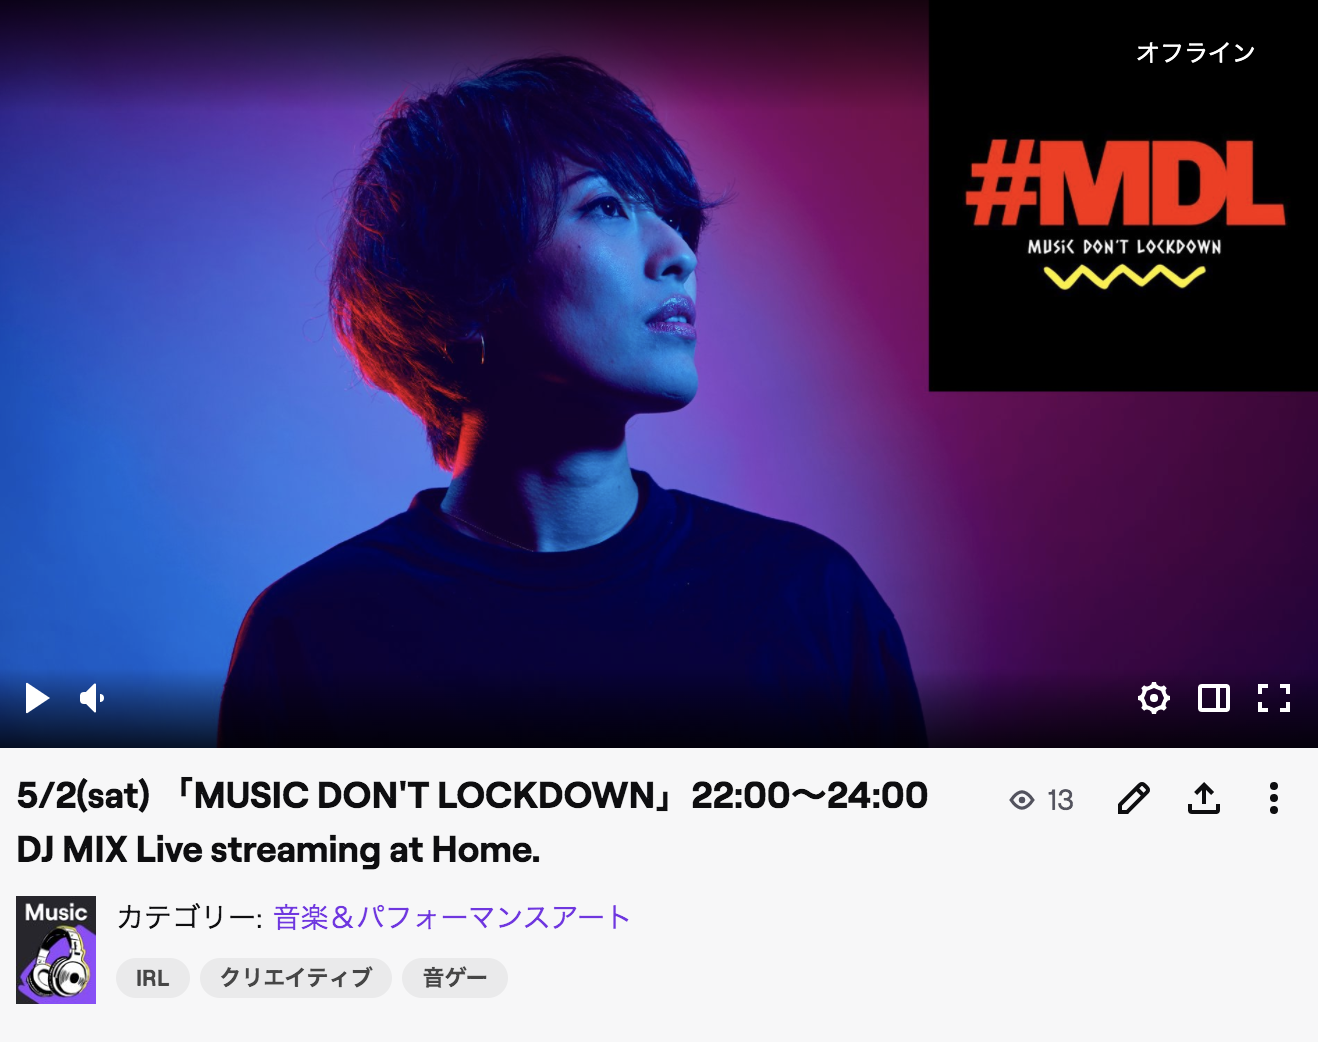 2020/05/02(sat) #MDL 「MUSIC DON’T LOCKDOWN」22:00〜24:00 DJ MIX Live Streaming